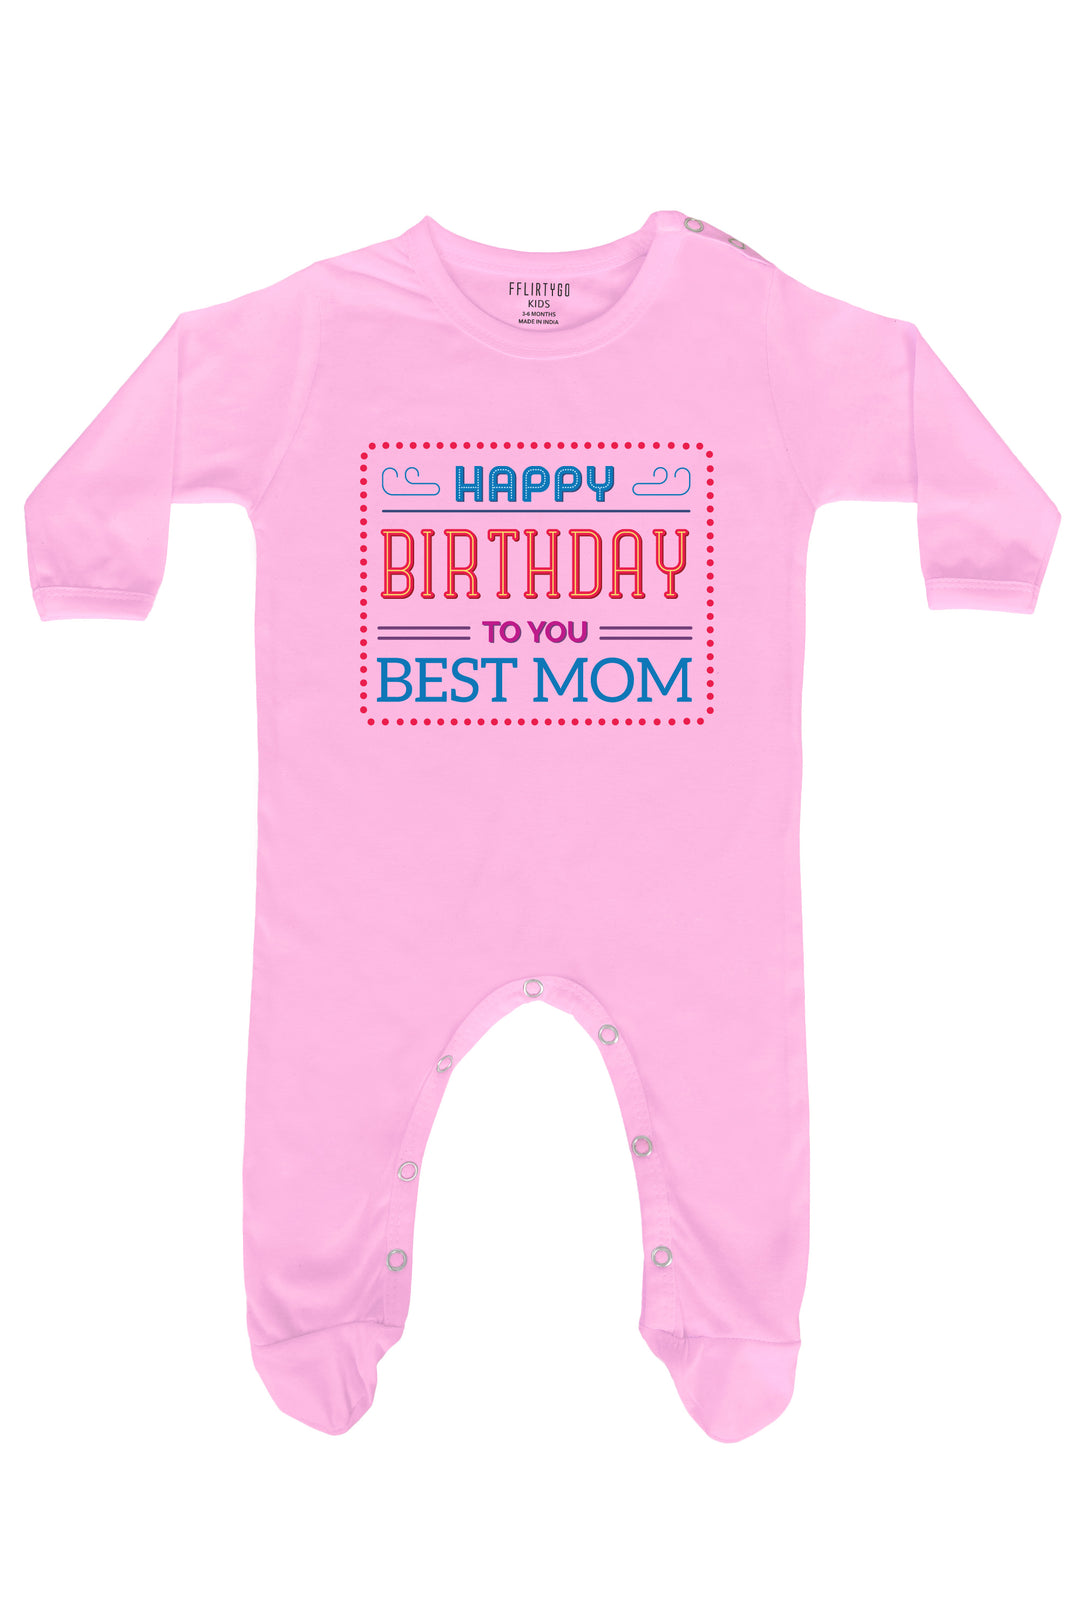 Happy Birthday Best Mom Baby Romper | Onesies